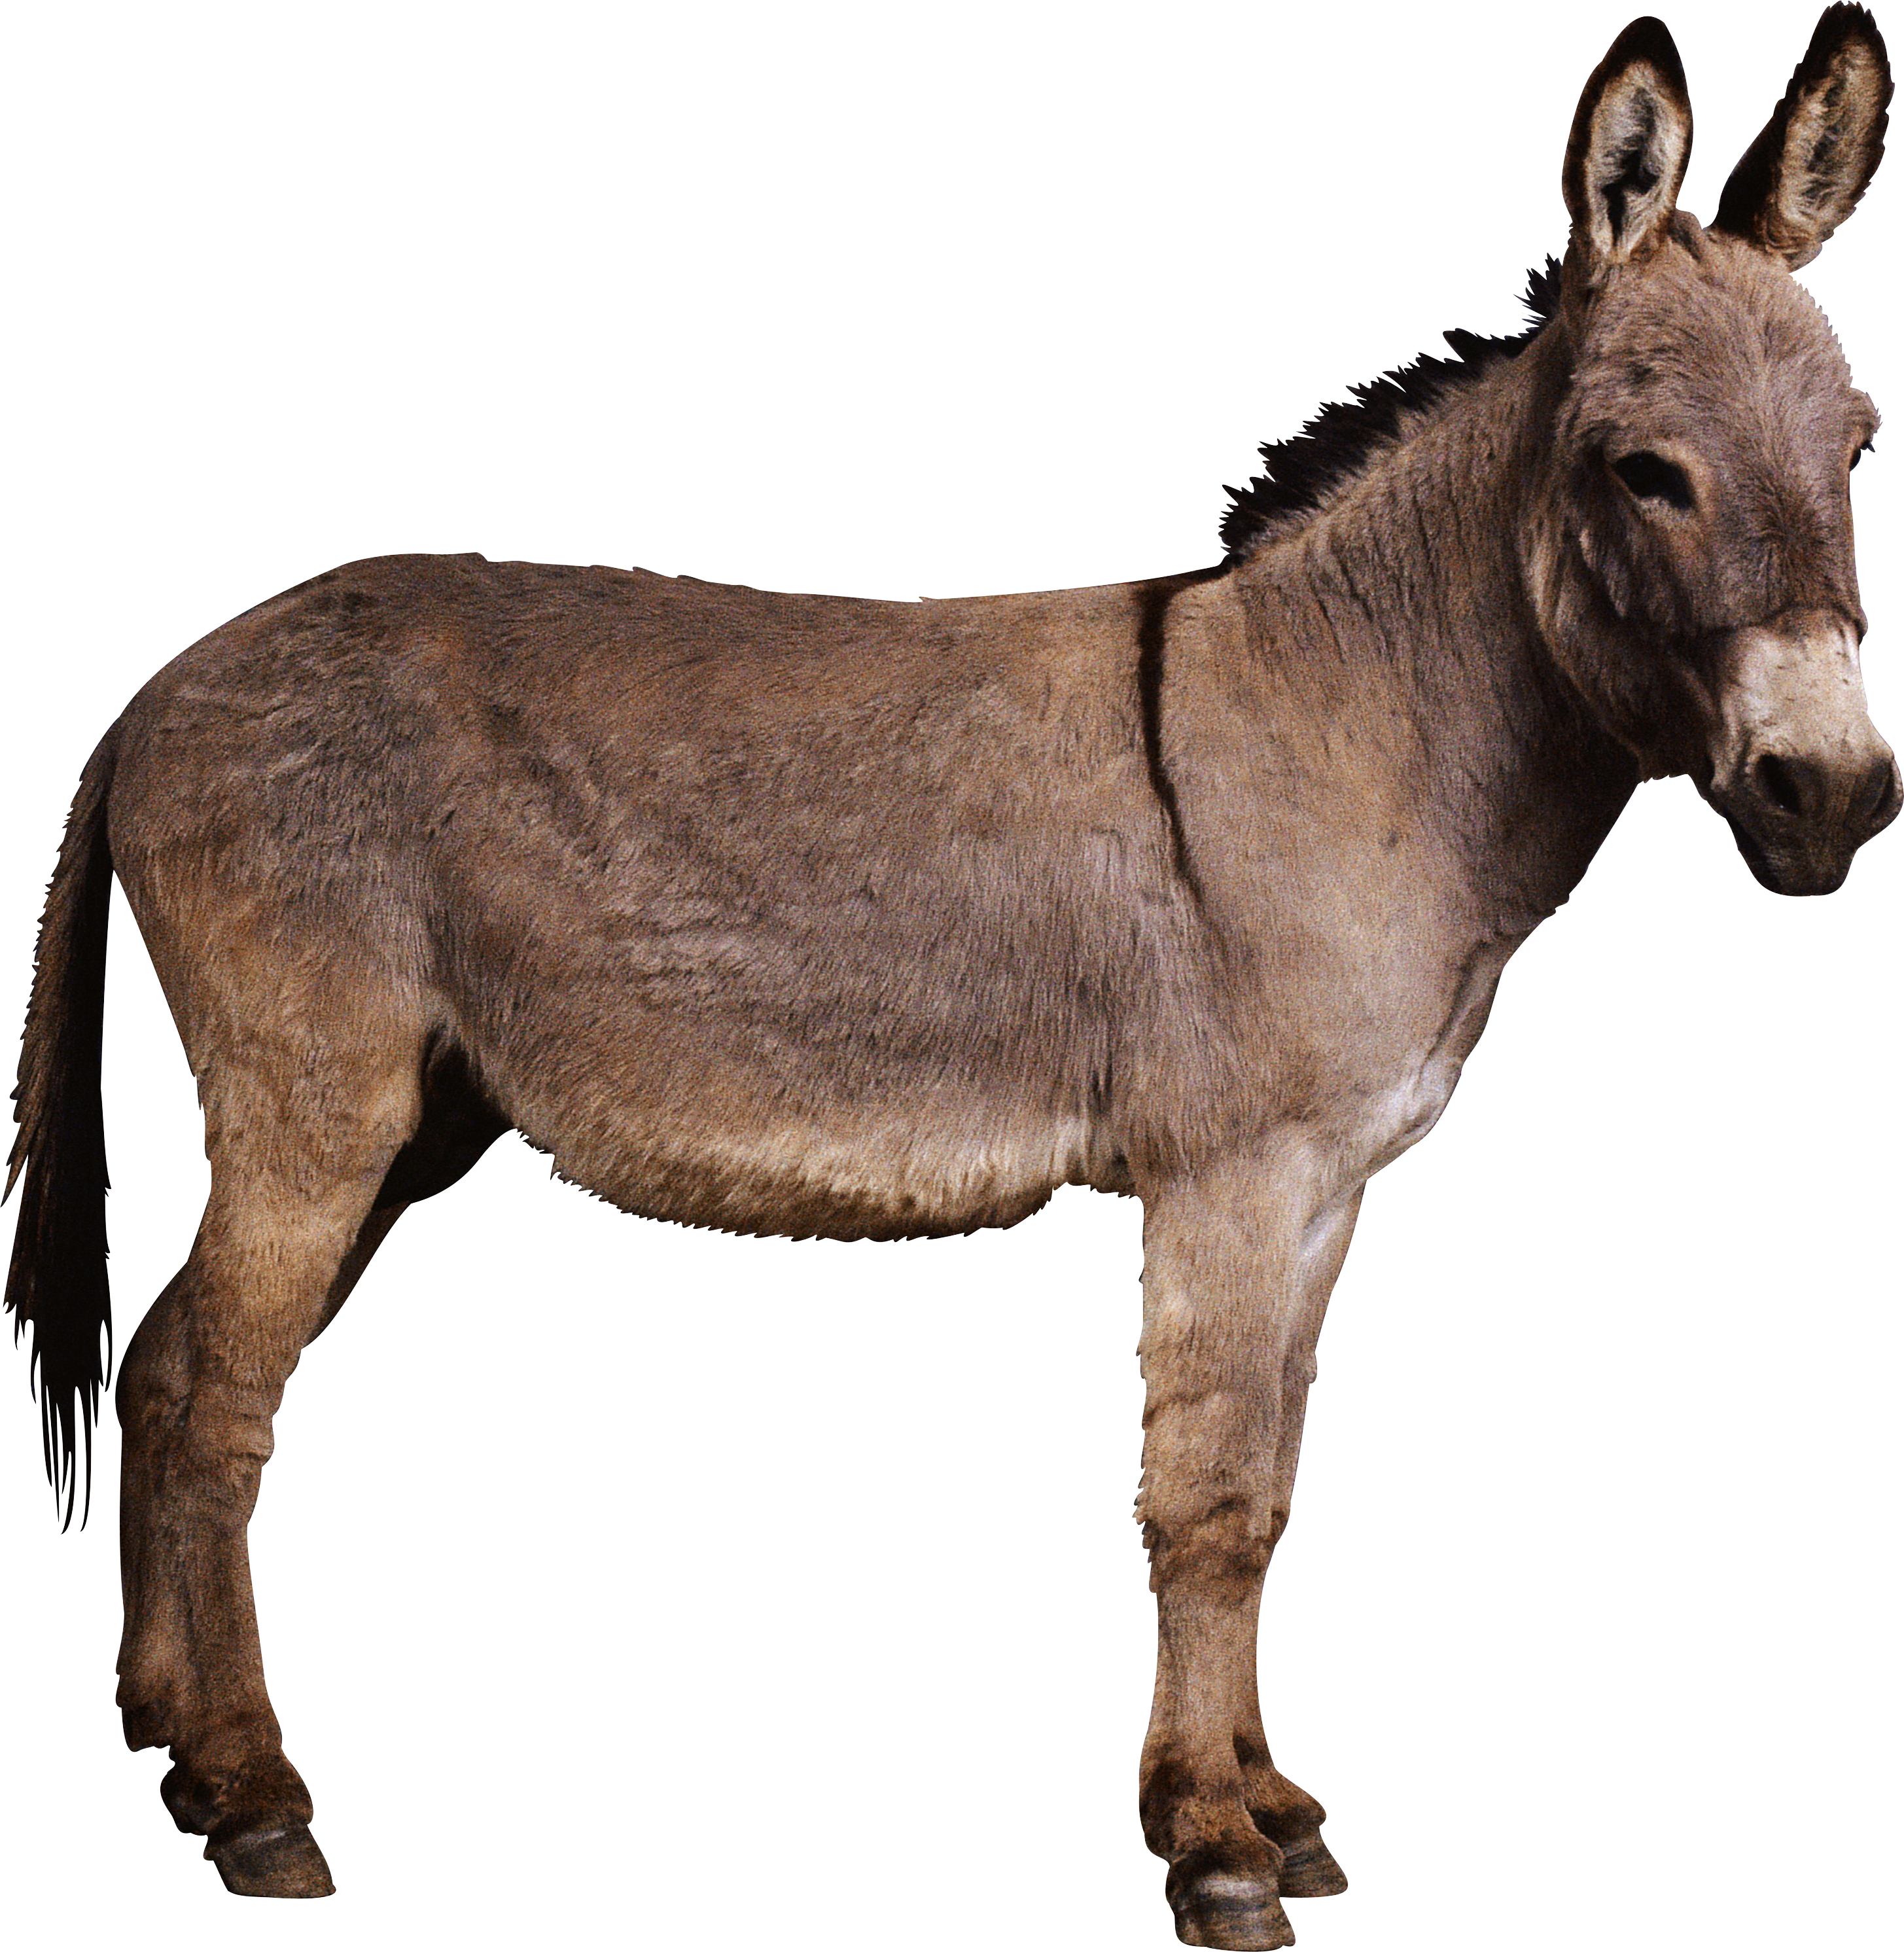 mule clipart domesticated